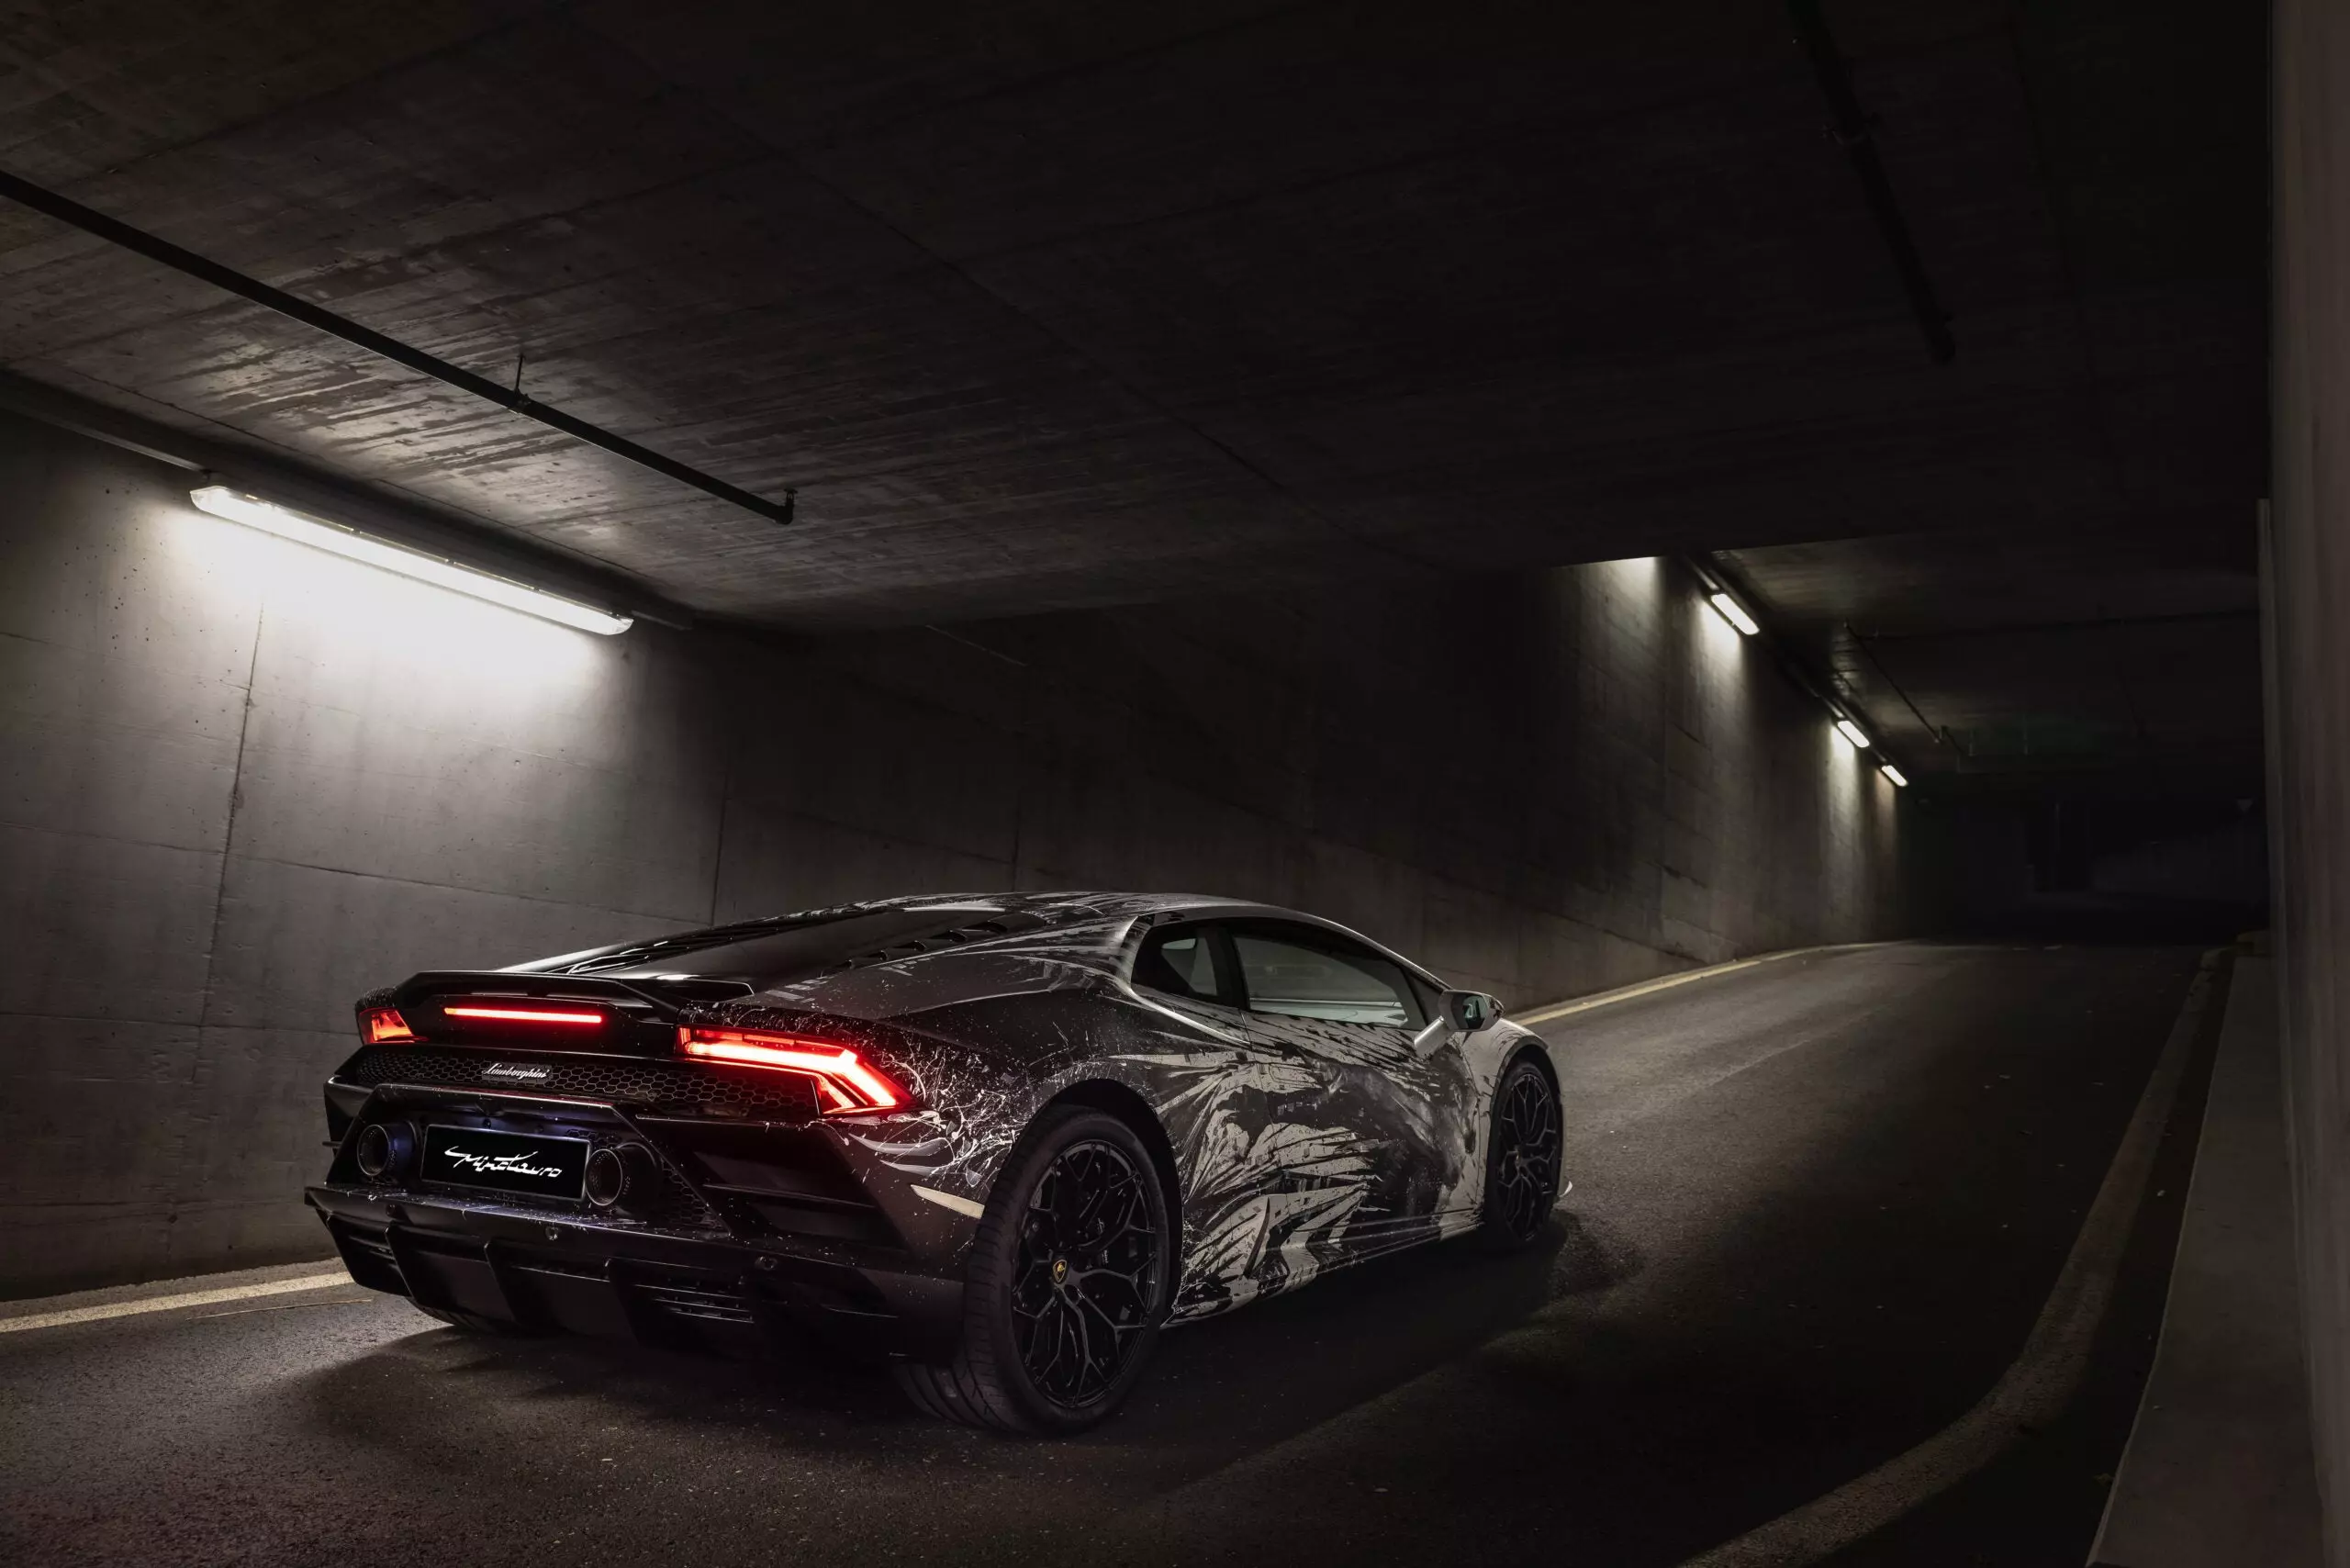 This Angsty Lamborghini Would Make a Good Backup Batmobile